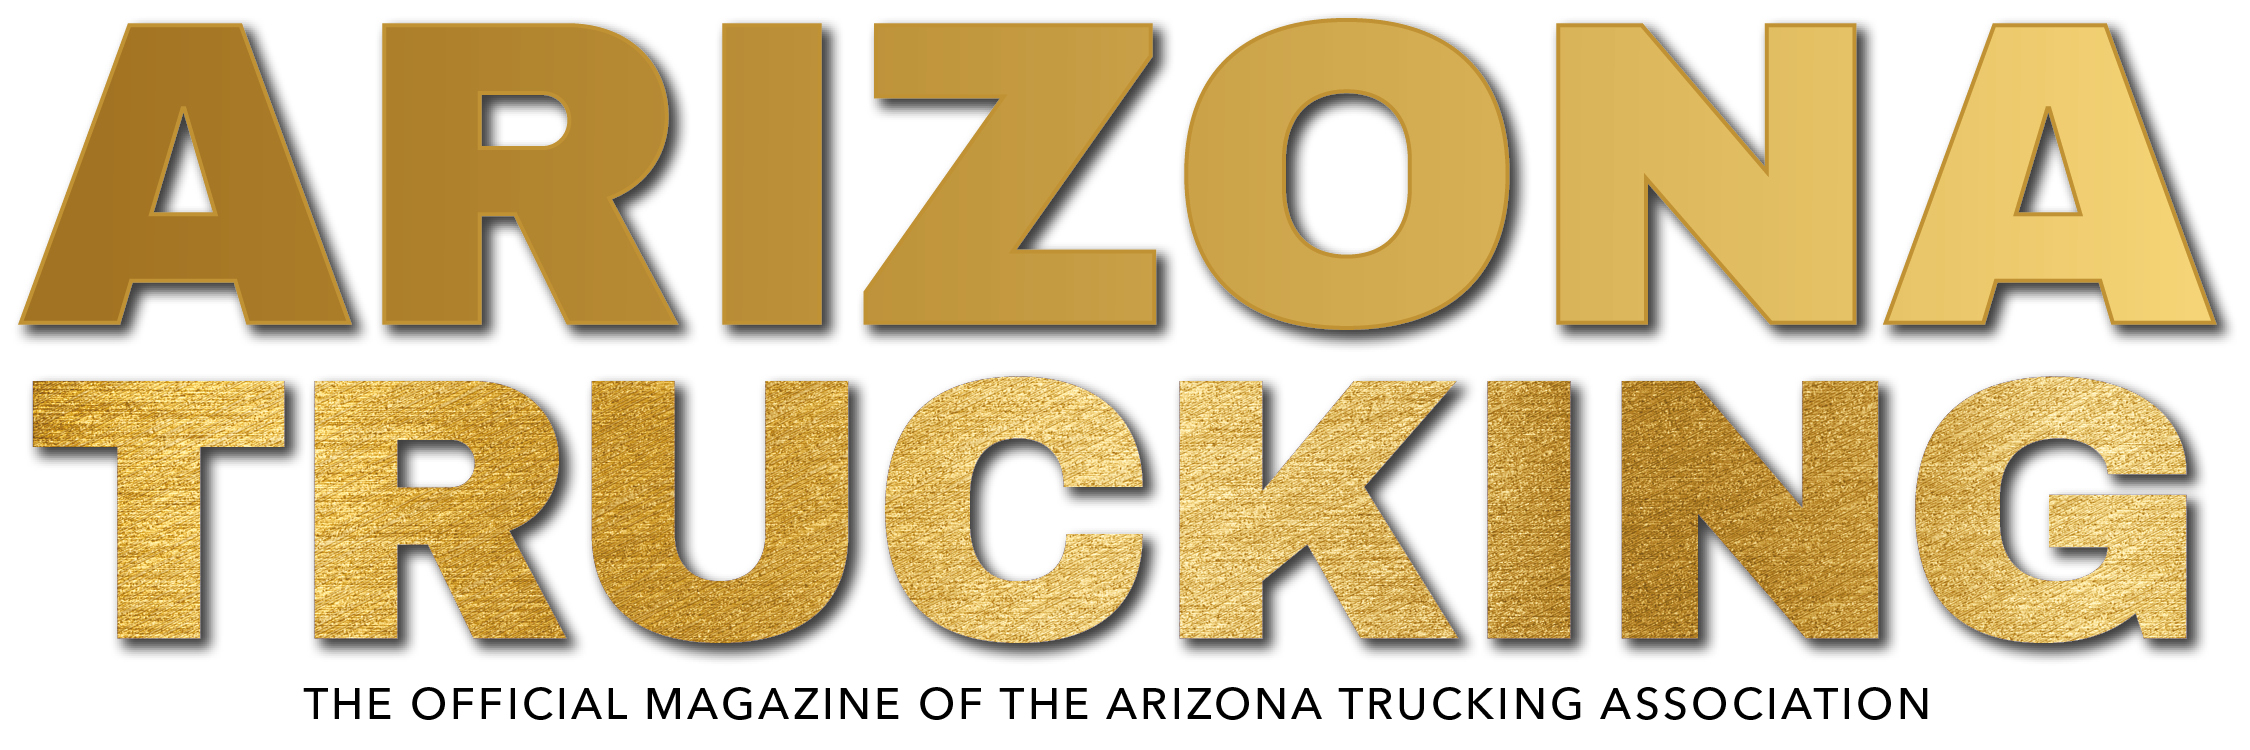 ATA Announces New Publisher For “Arizona Trucking” Magazine